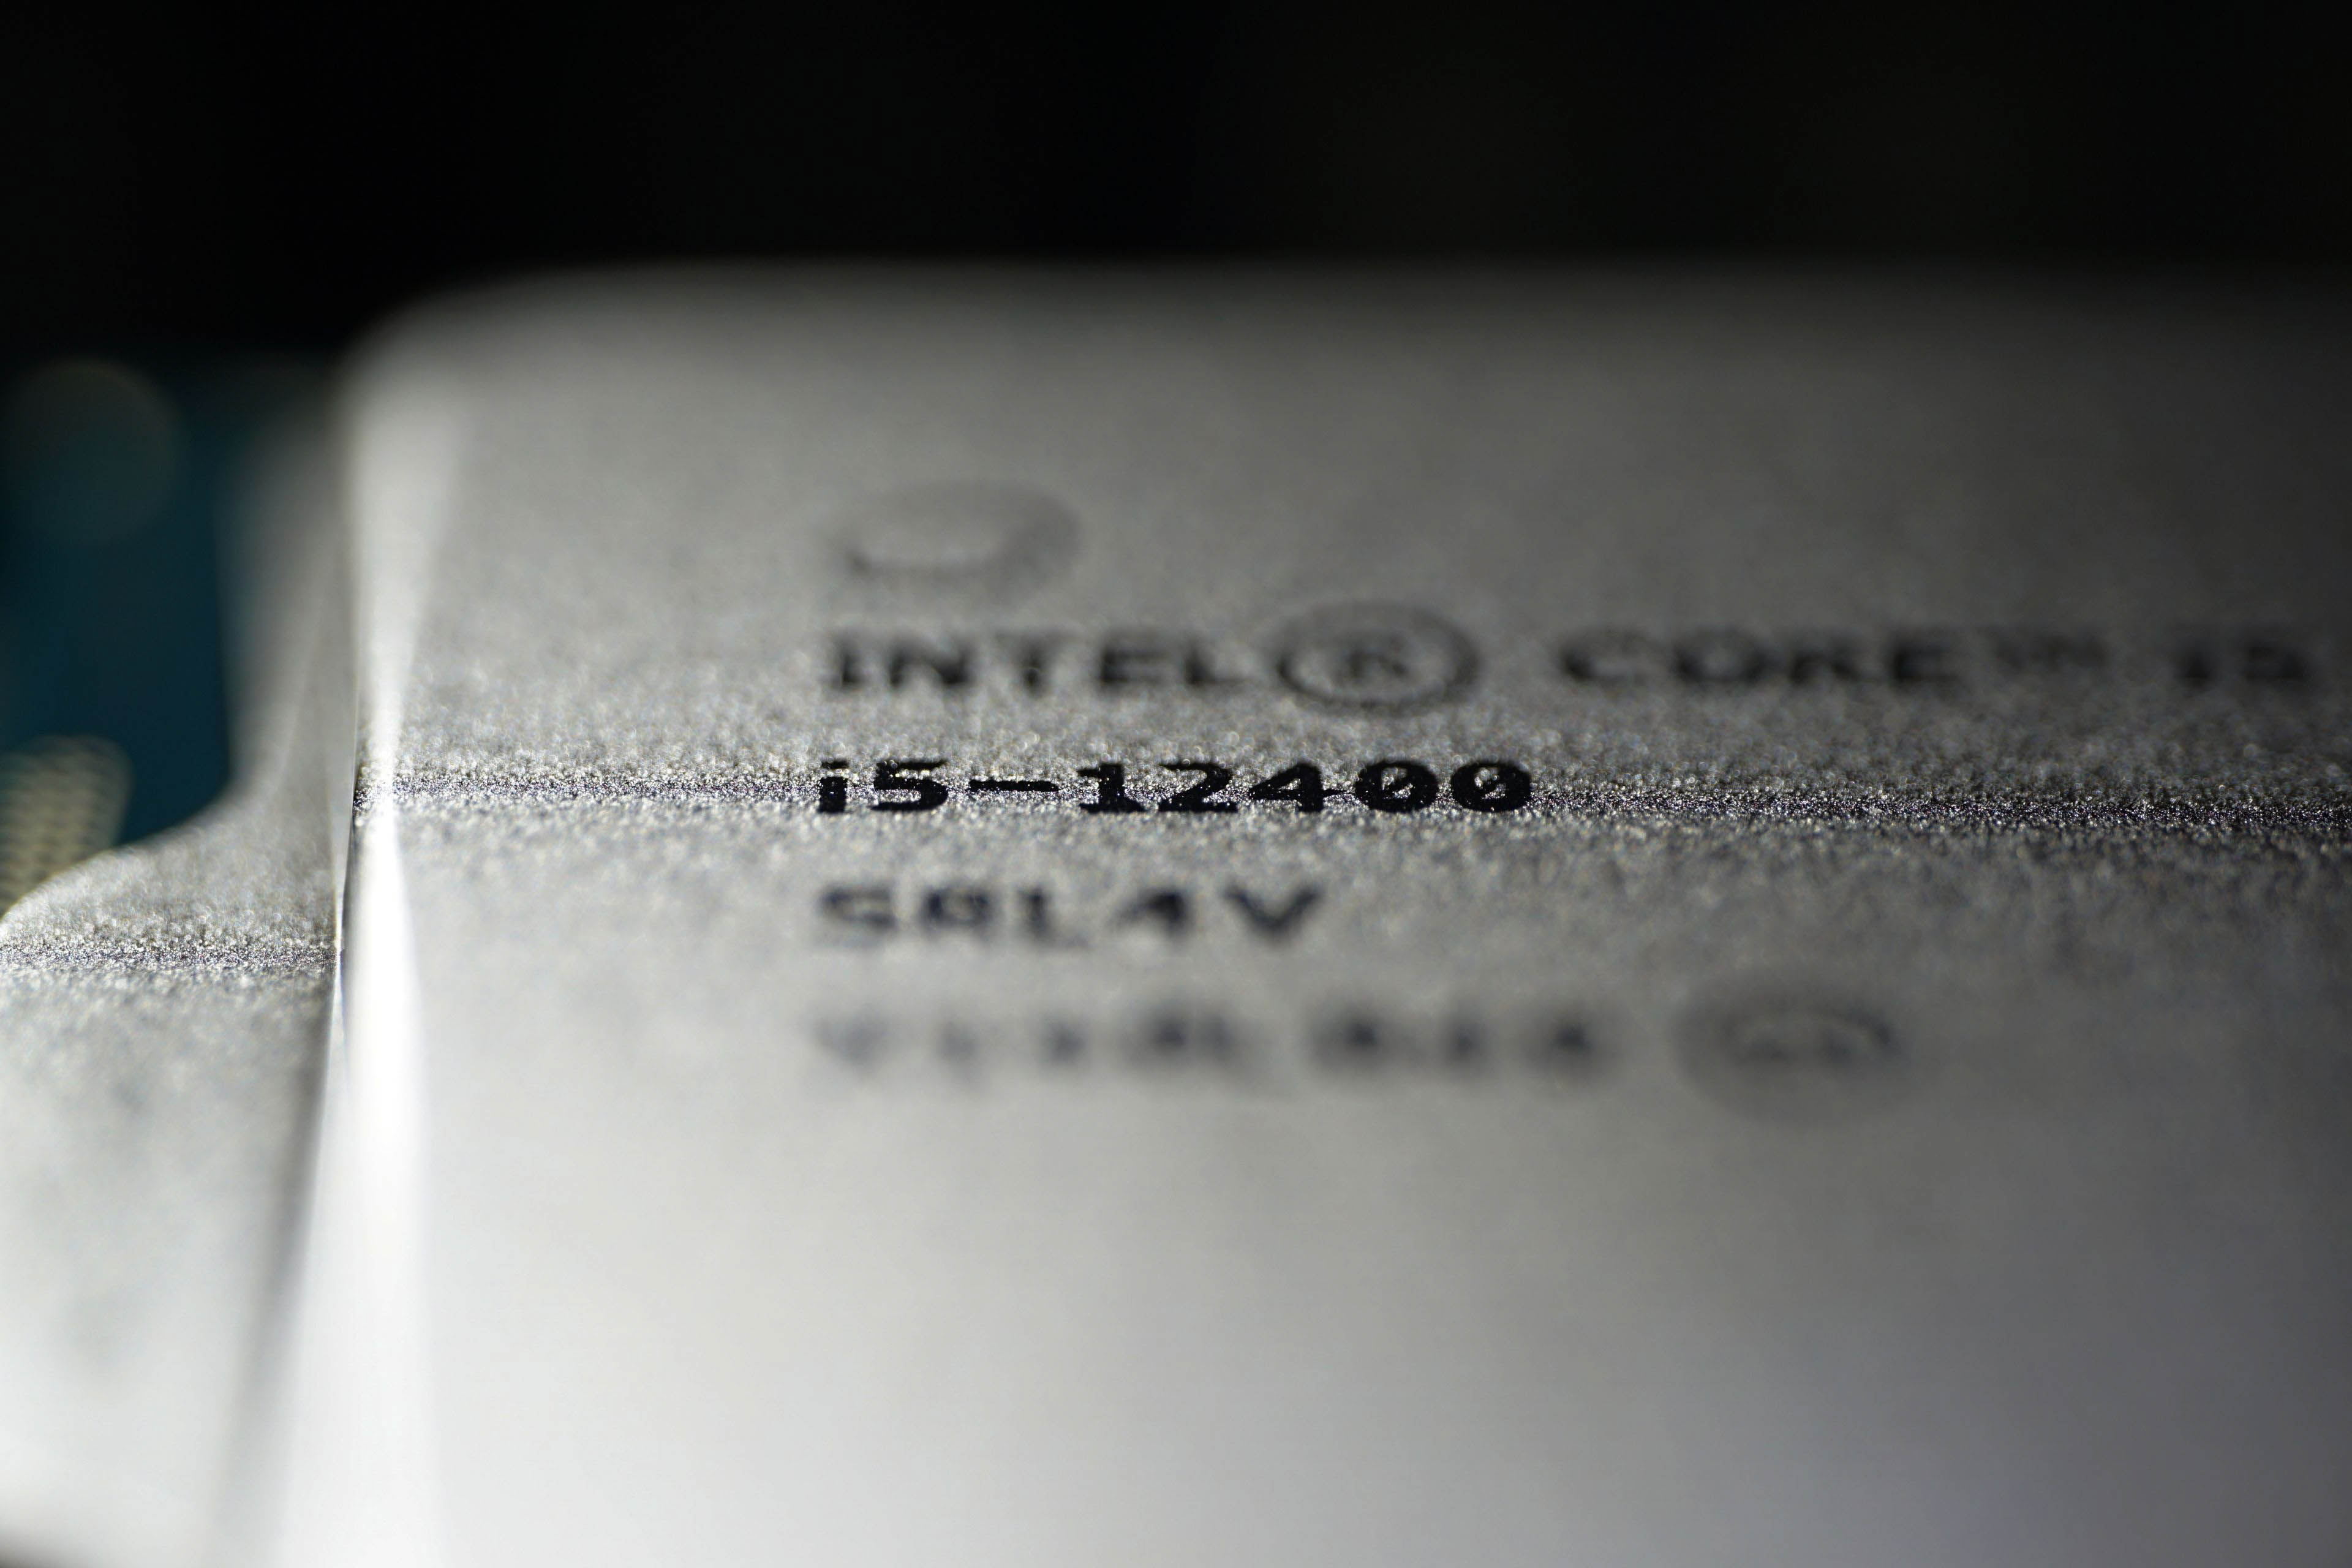 Intel Core i5-12400, 12th Gen Processor